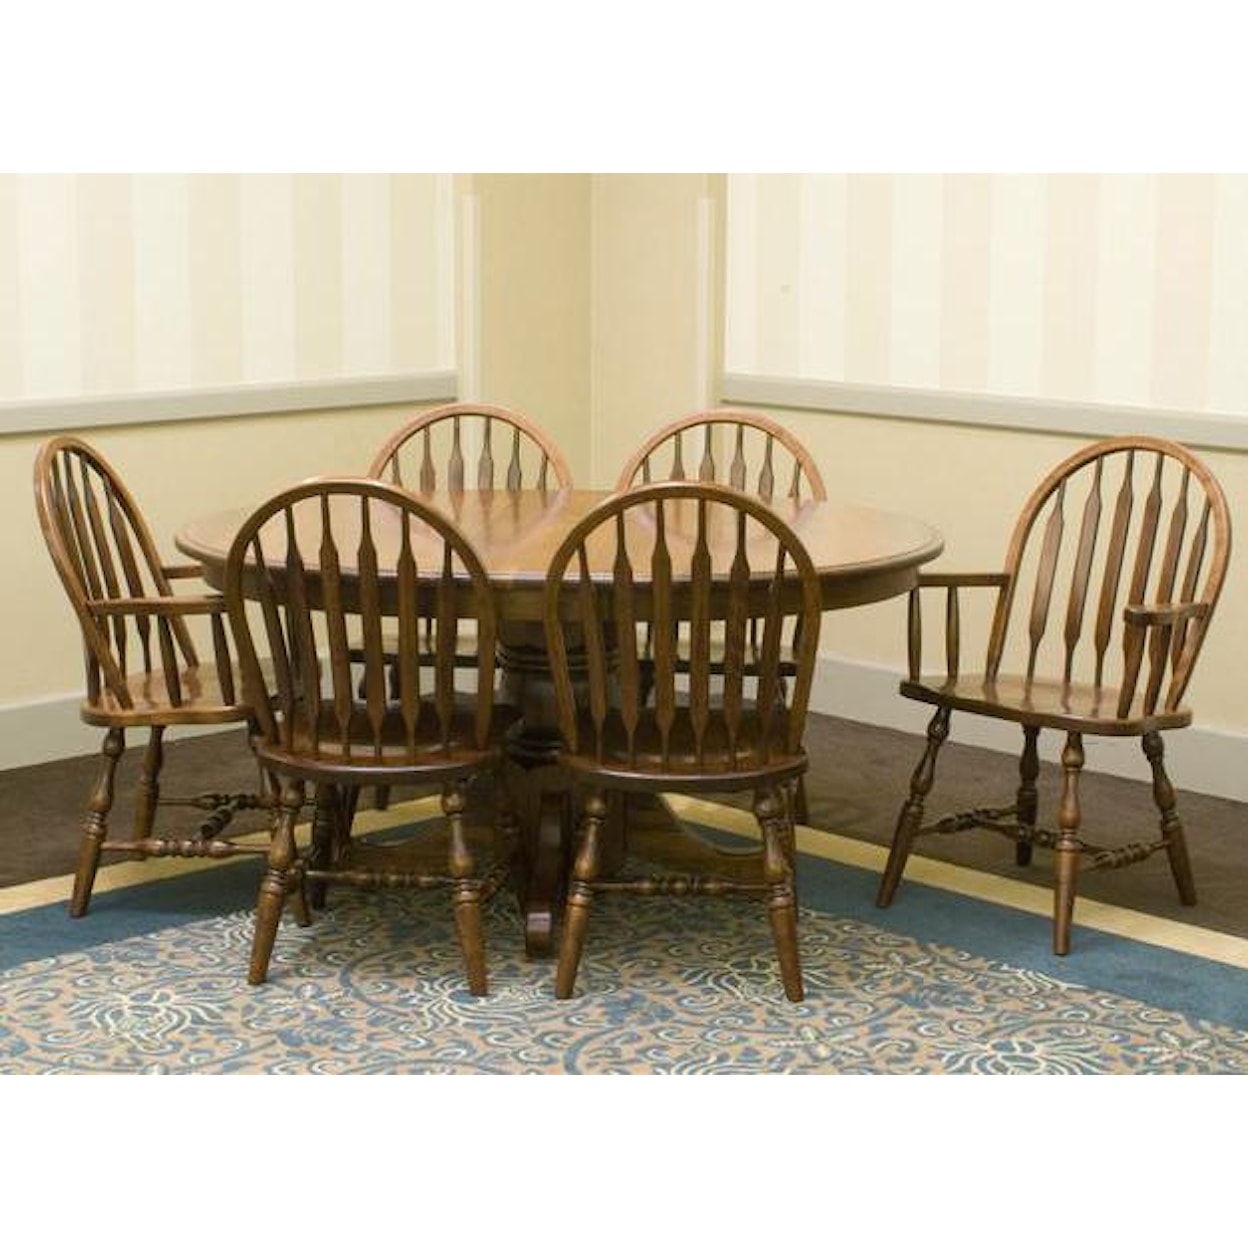 Mavin Jr. Bowback Group Customizable 7 Pc. Table & Chair Set